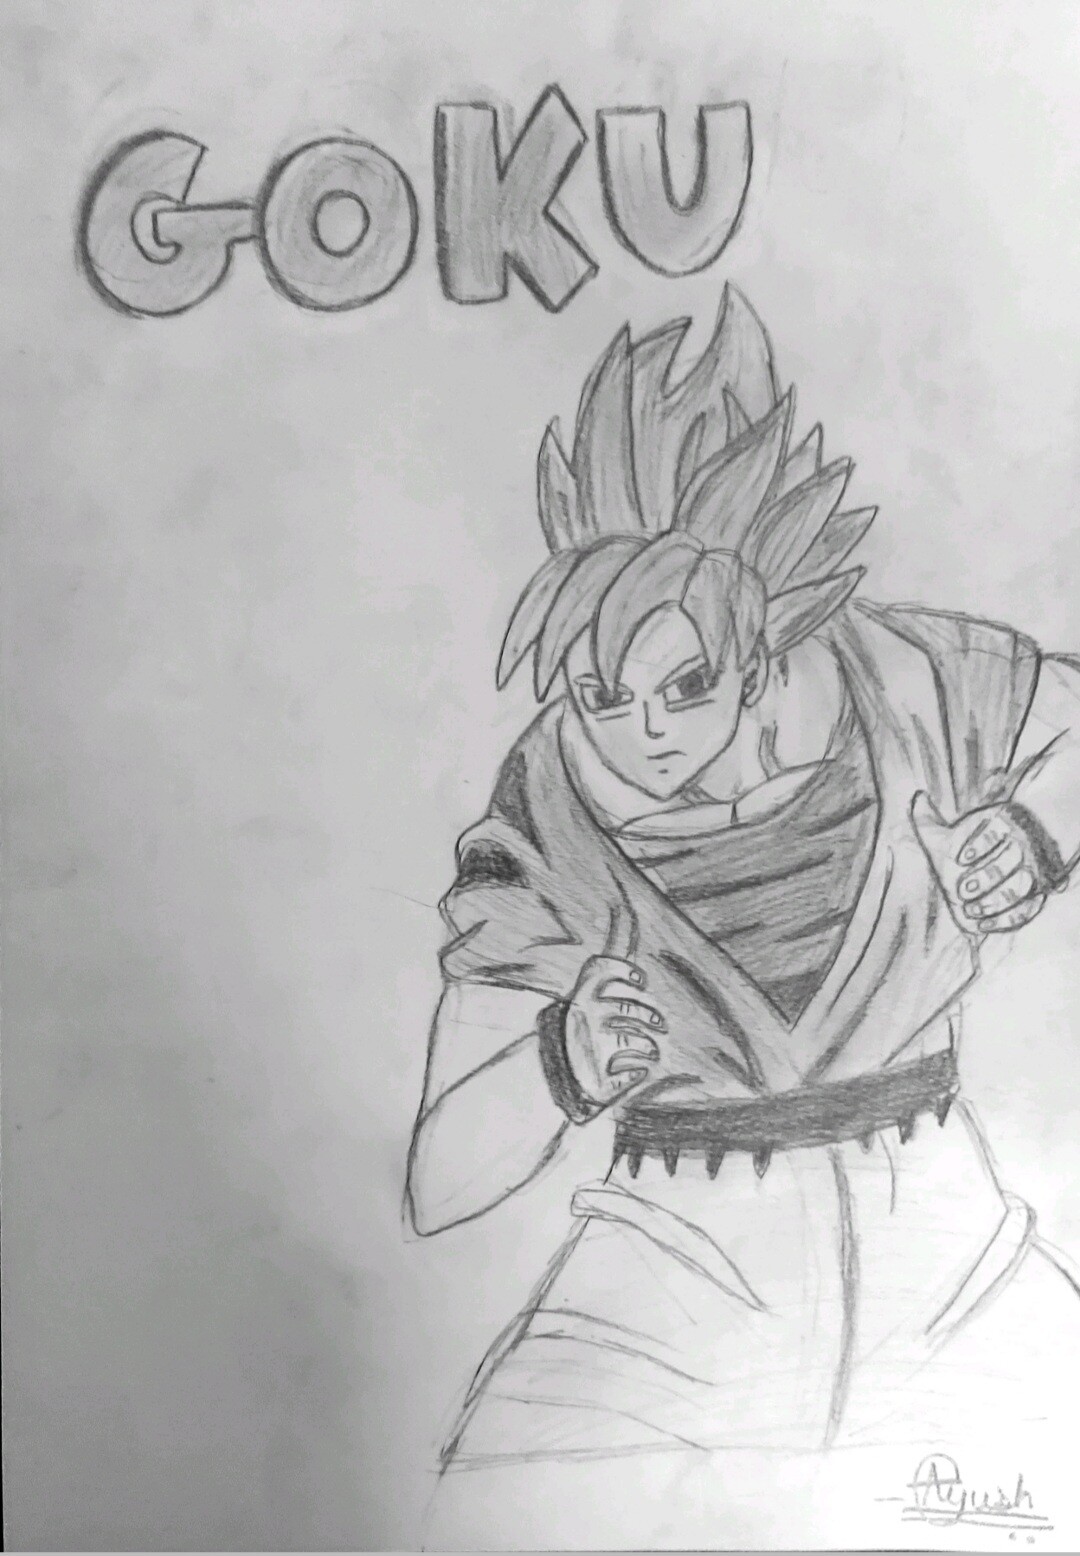 ArtStation - Sketch of Goku by Ayush Vedula